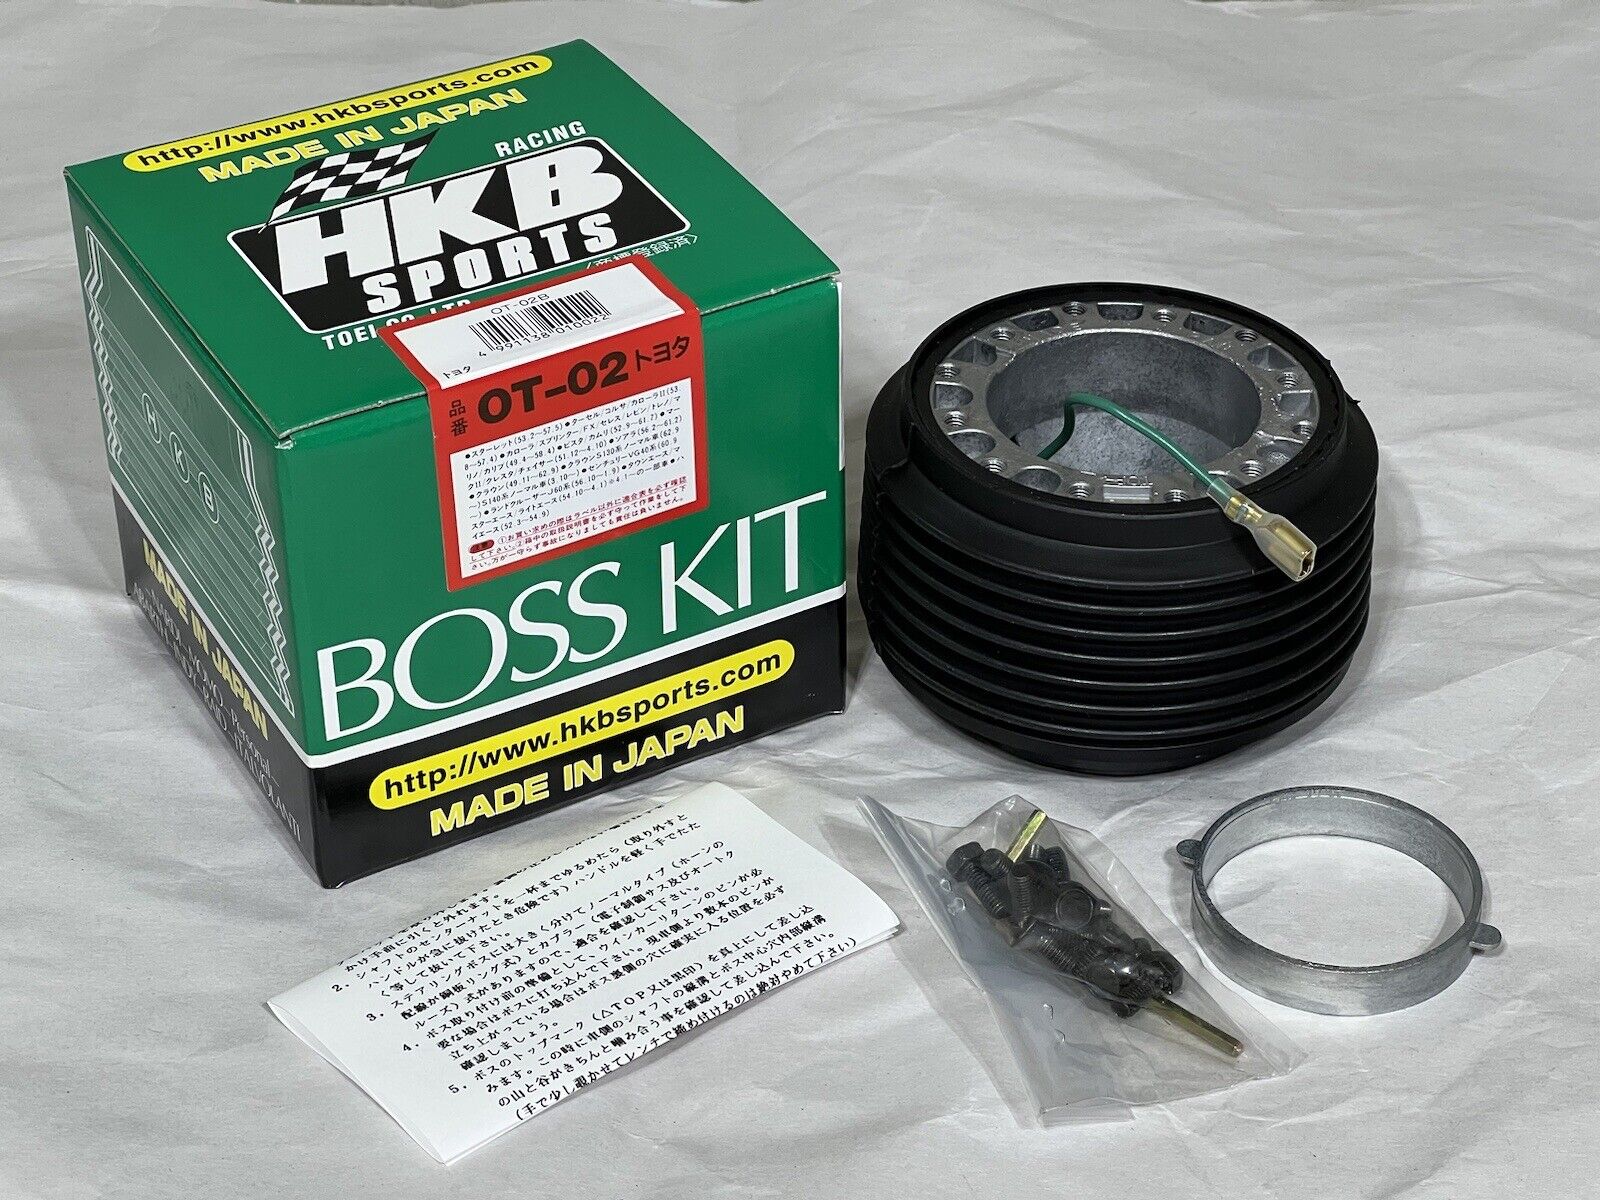 HKB SPORTS Steering Wheel Adapter Kit Boss Kit 1978-1982 Toyota Starlet KP61